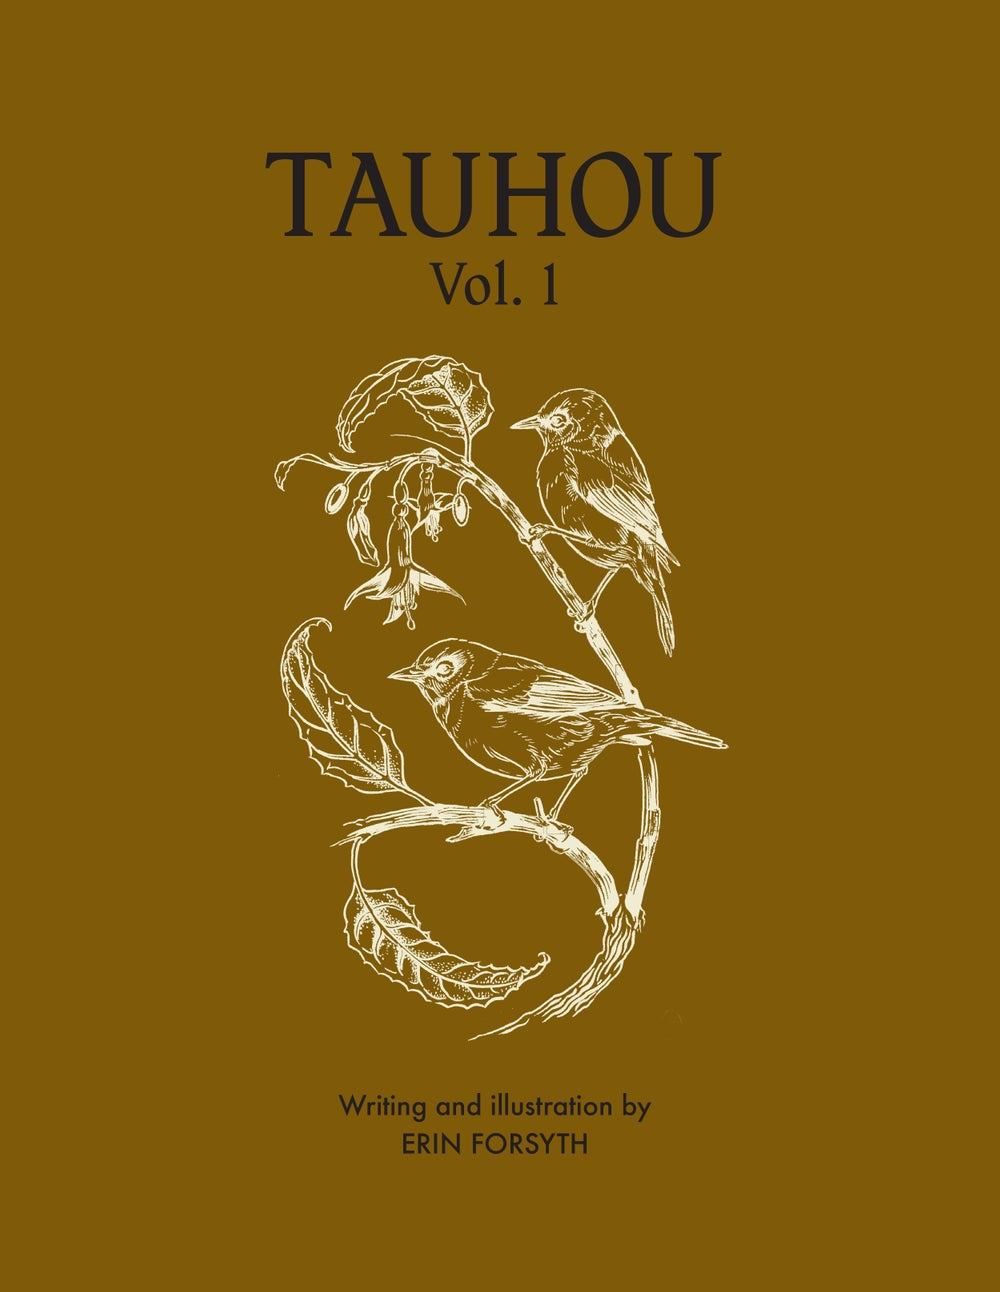 Tauhou Vol. 1 - Strange Goods